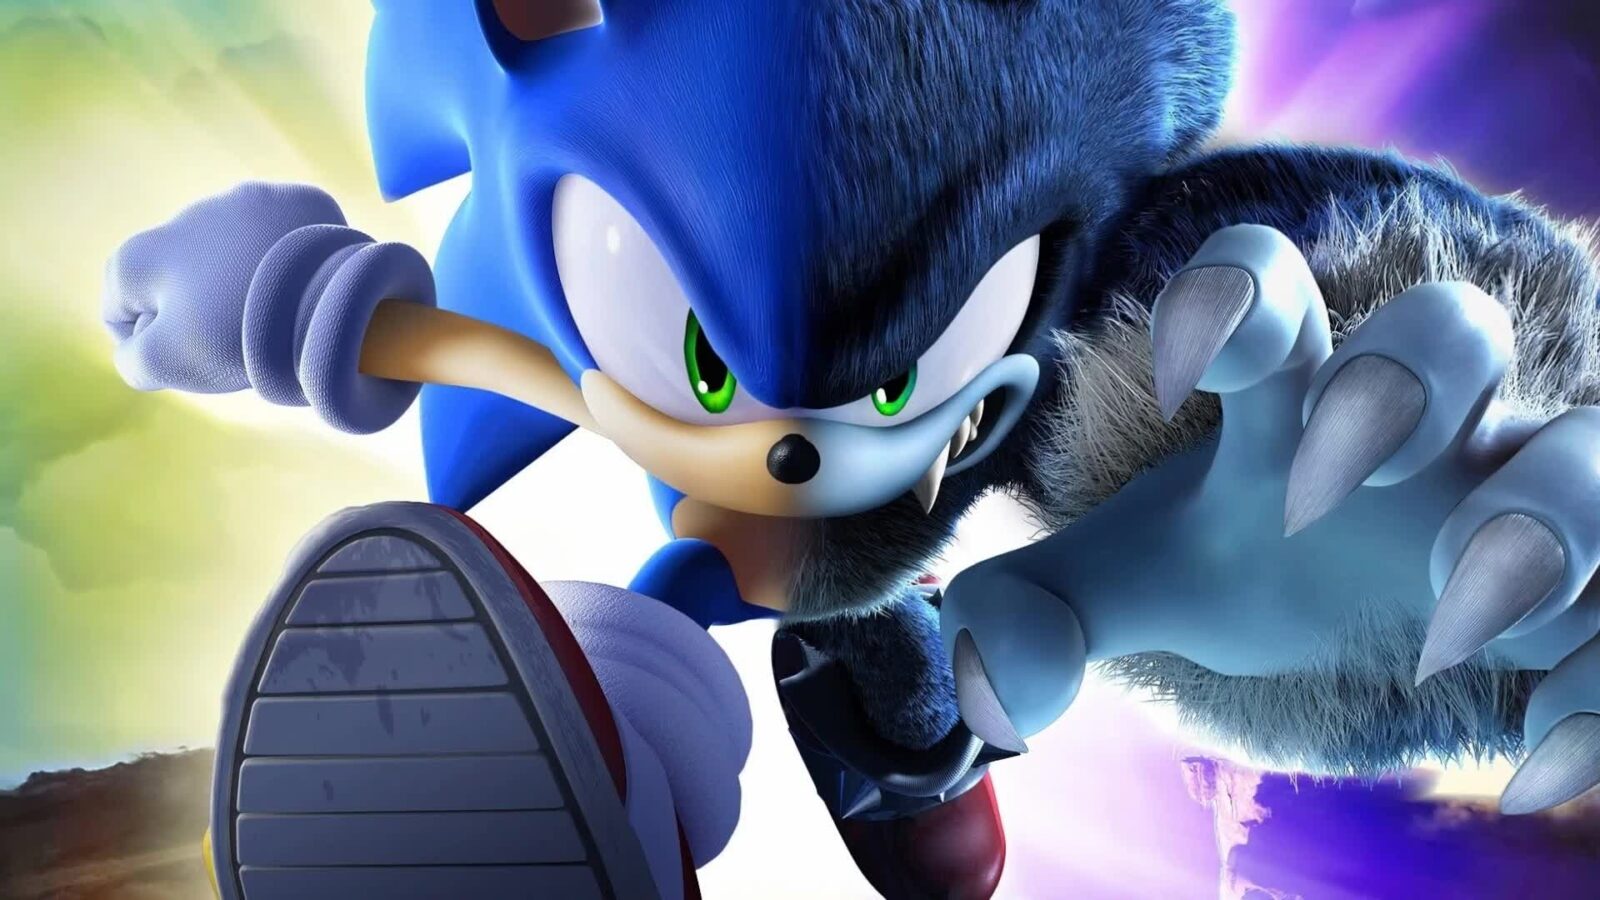 Sonic The Hedgehog SEGA - Free Animated Live Wallpaper - Live Desktop